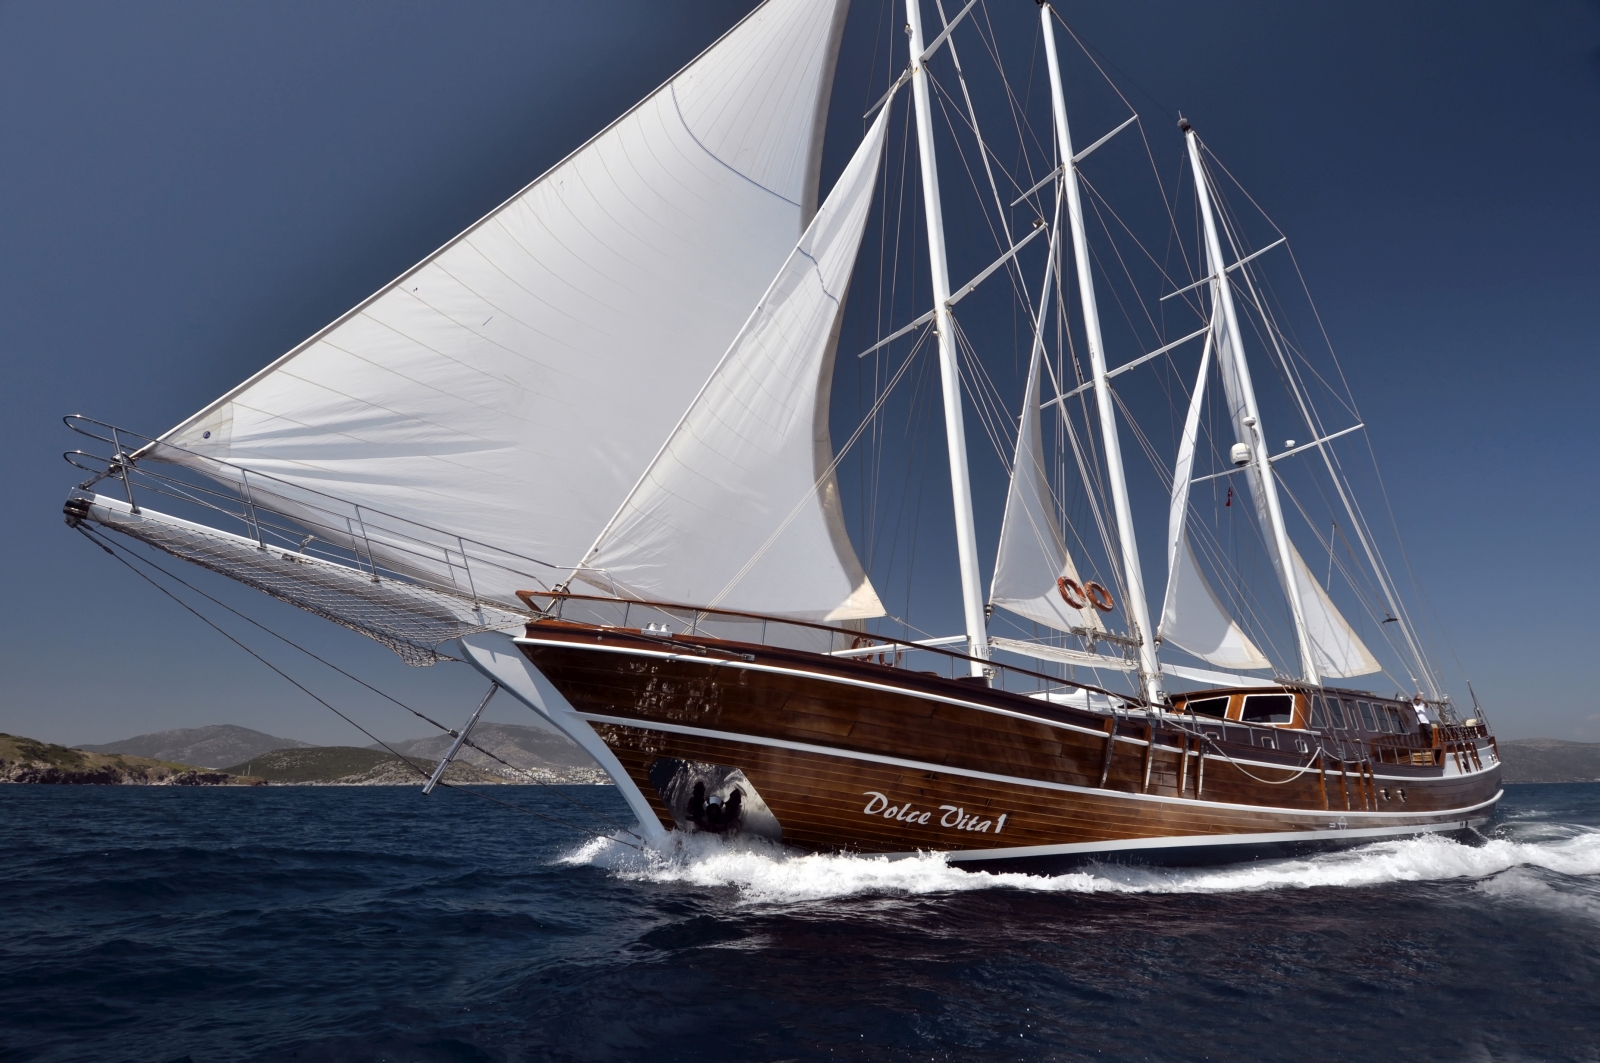 The elegant Dolce Vita gulet in full sail in Croatia